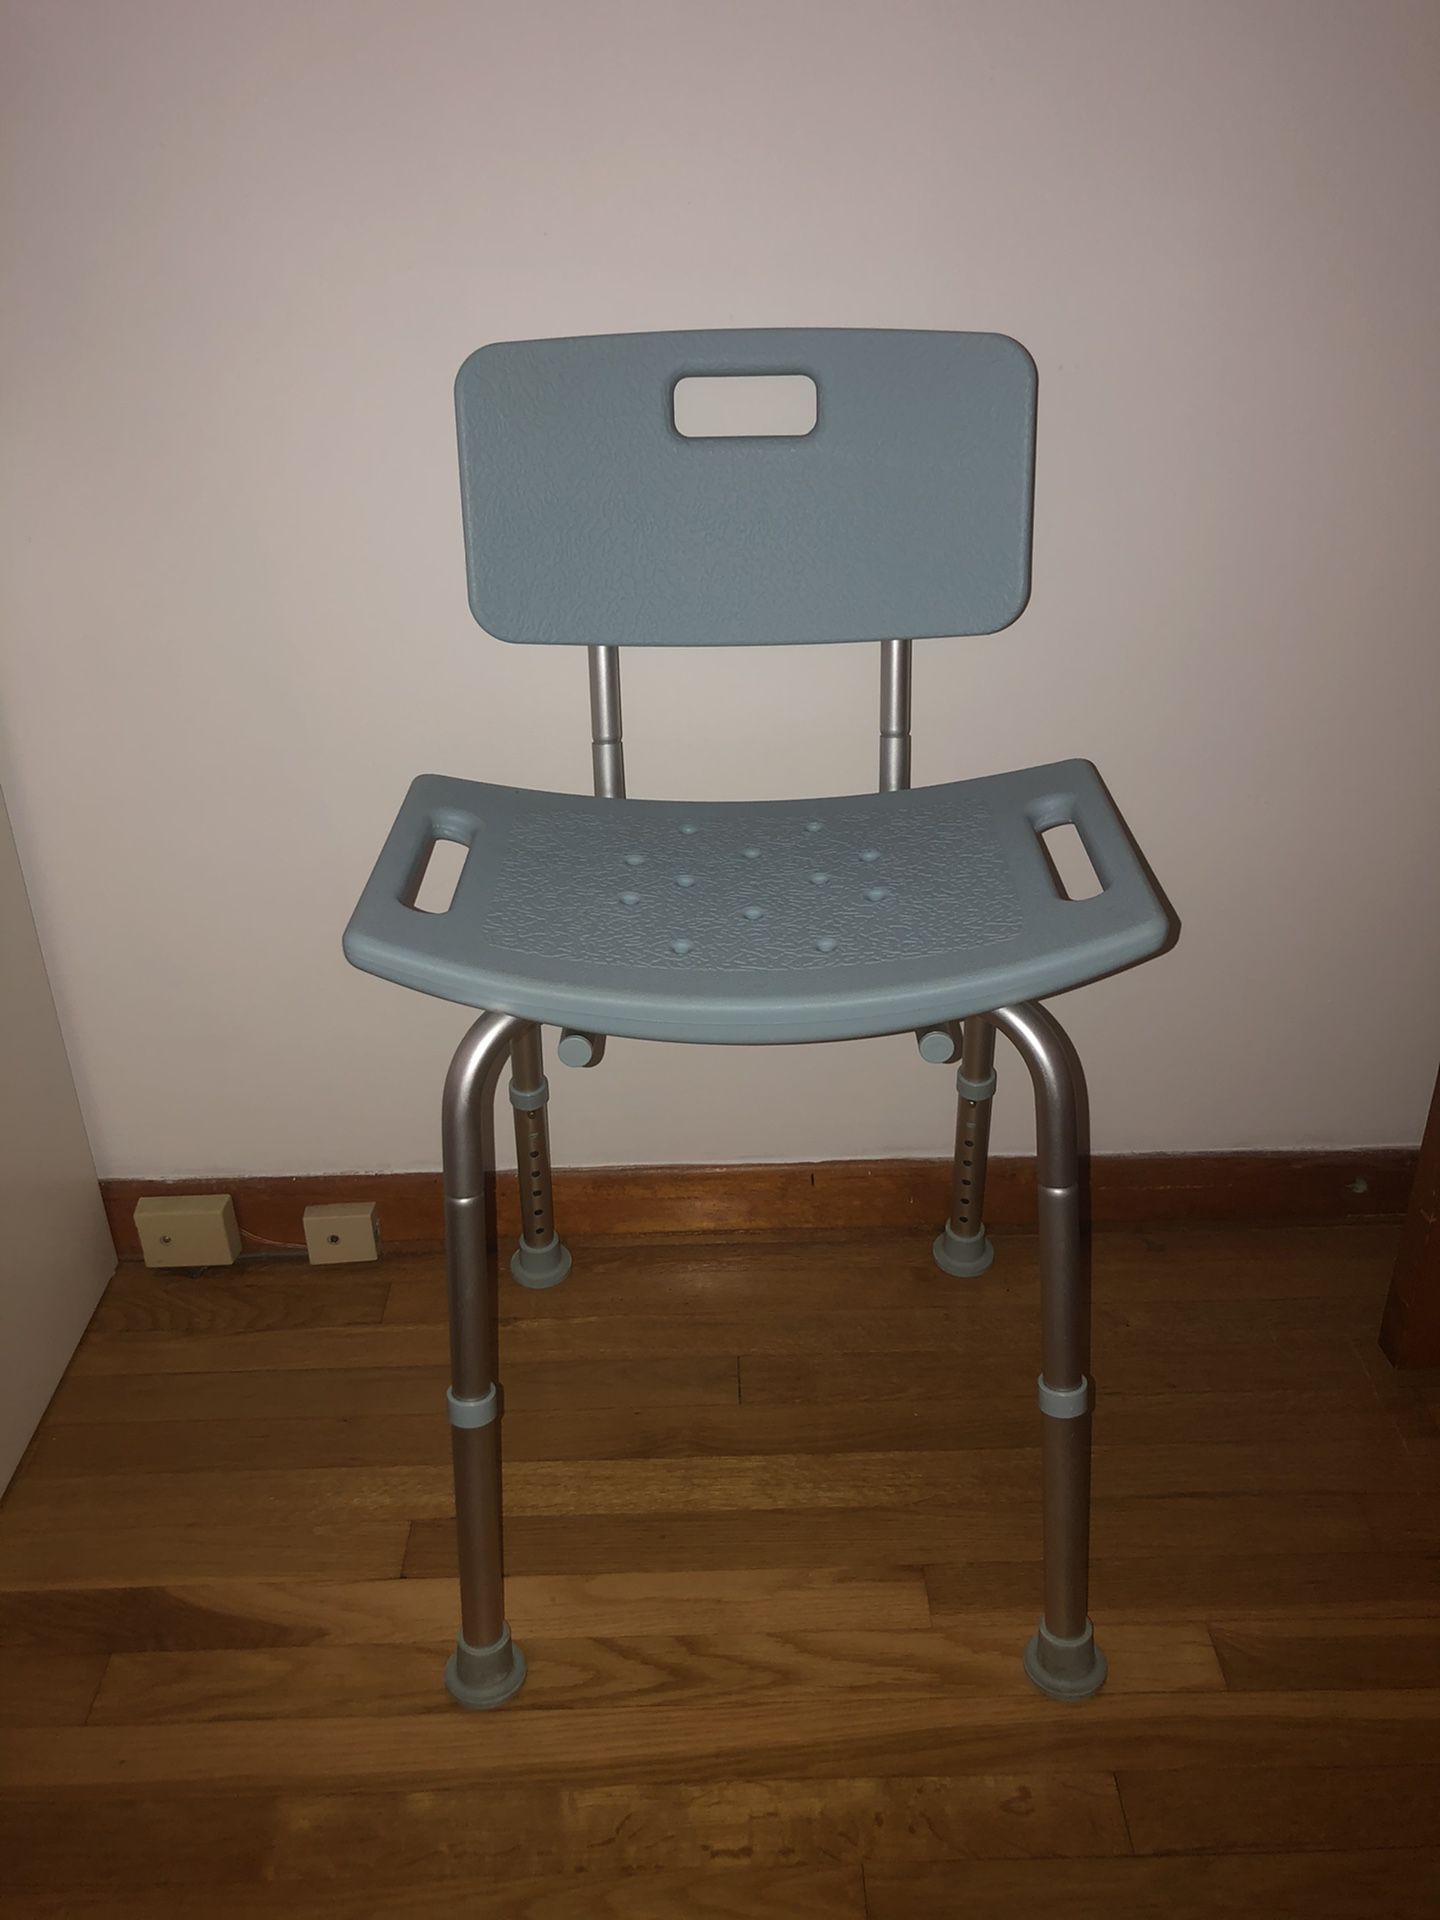 Medical chair for bathtub or shower